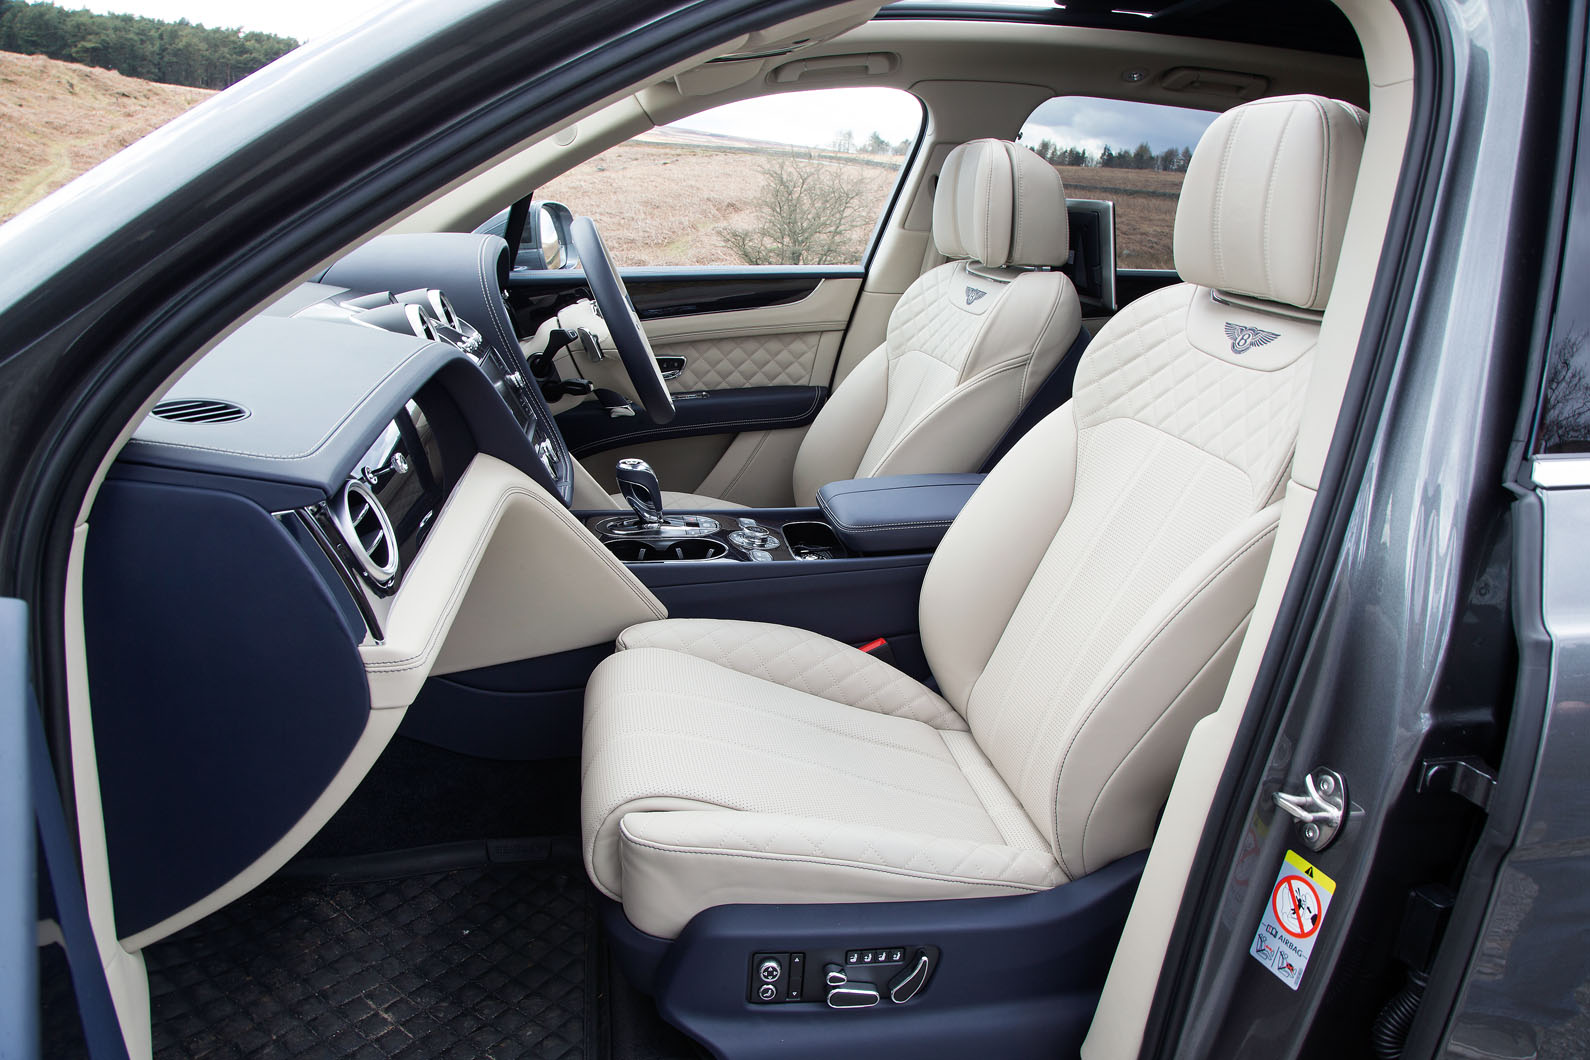 Bentley Bentayga interior